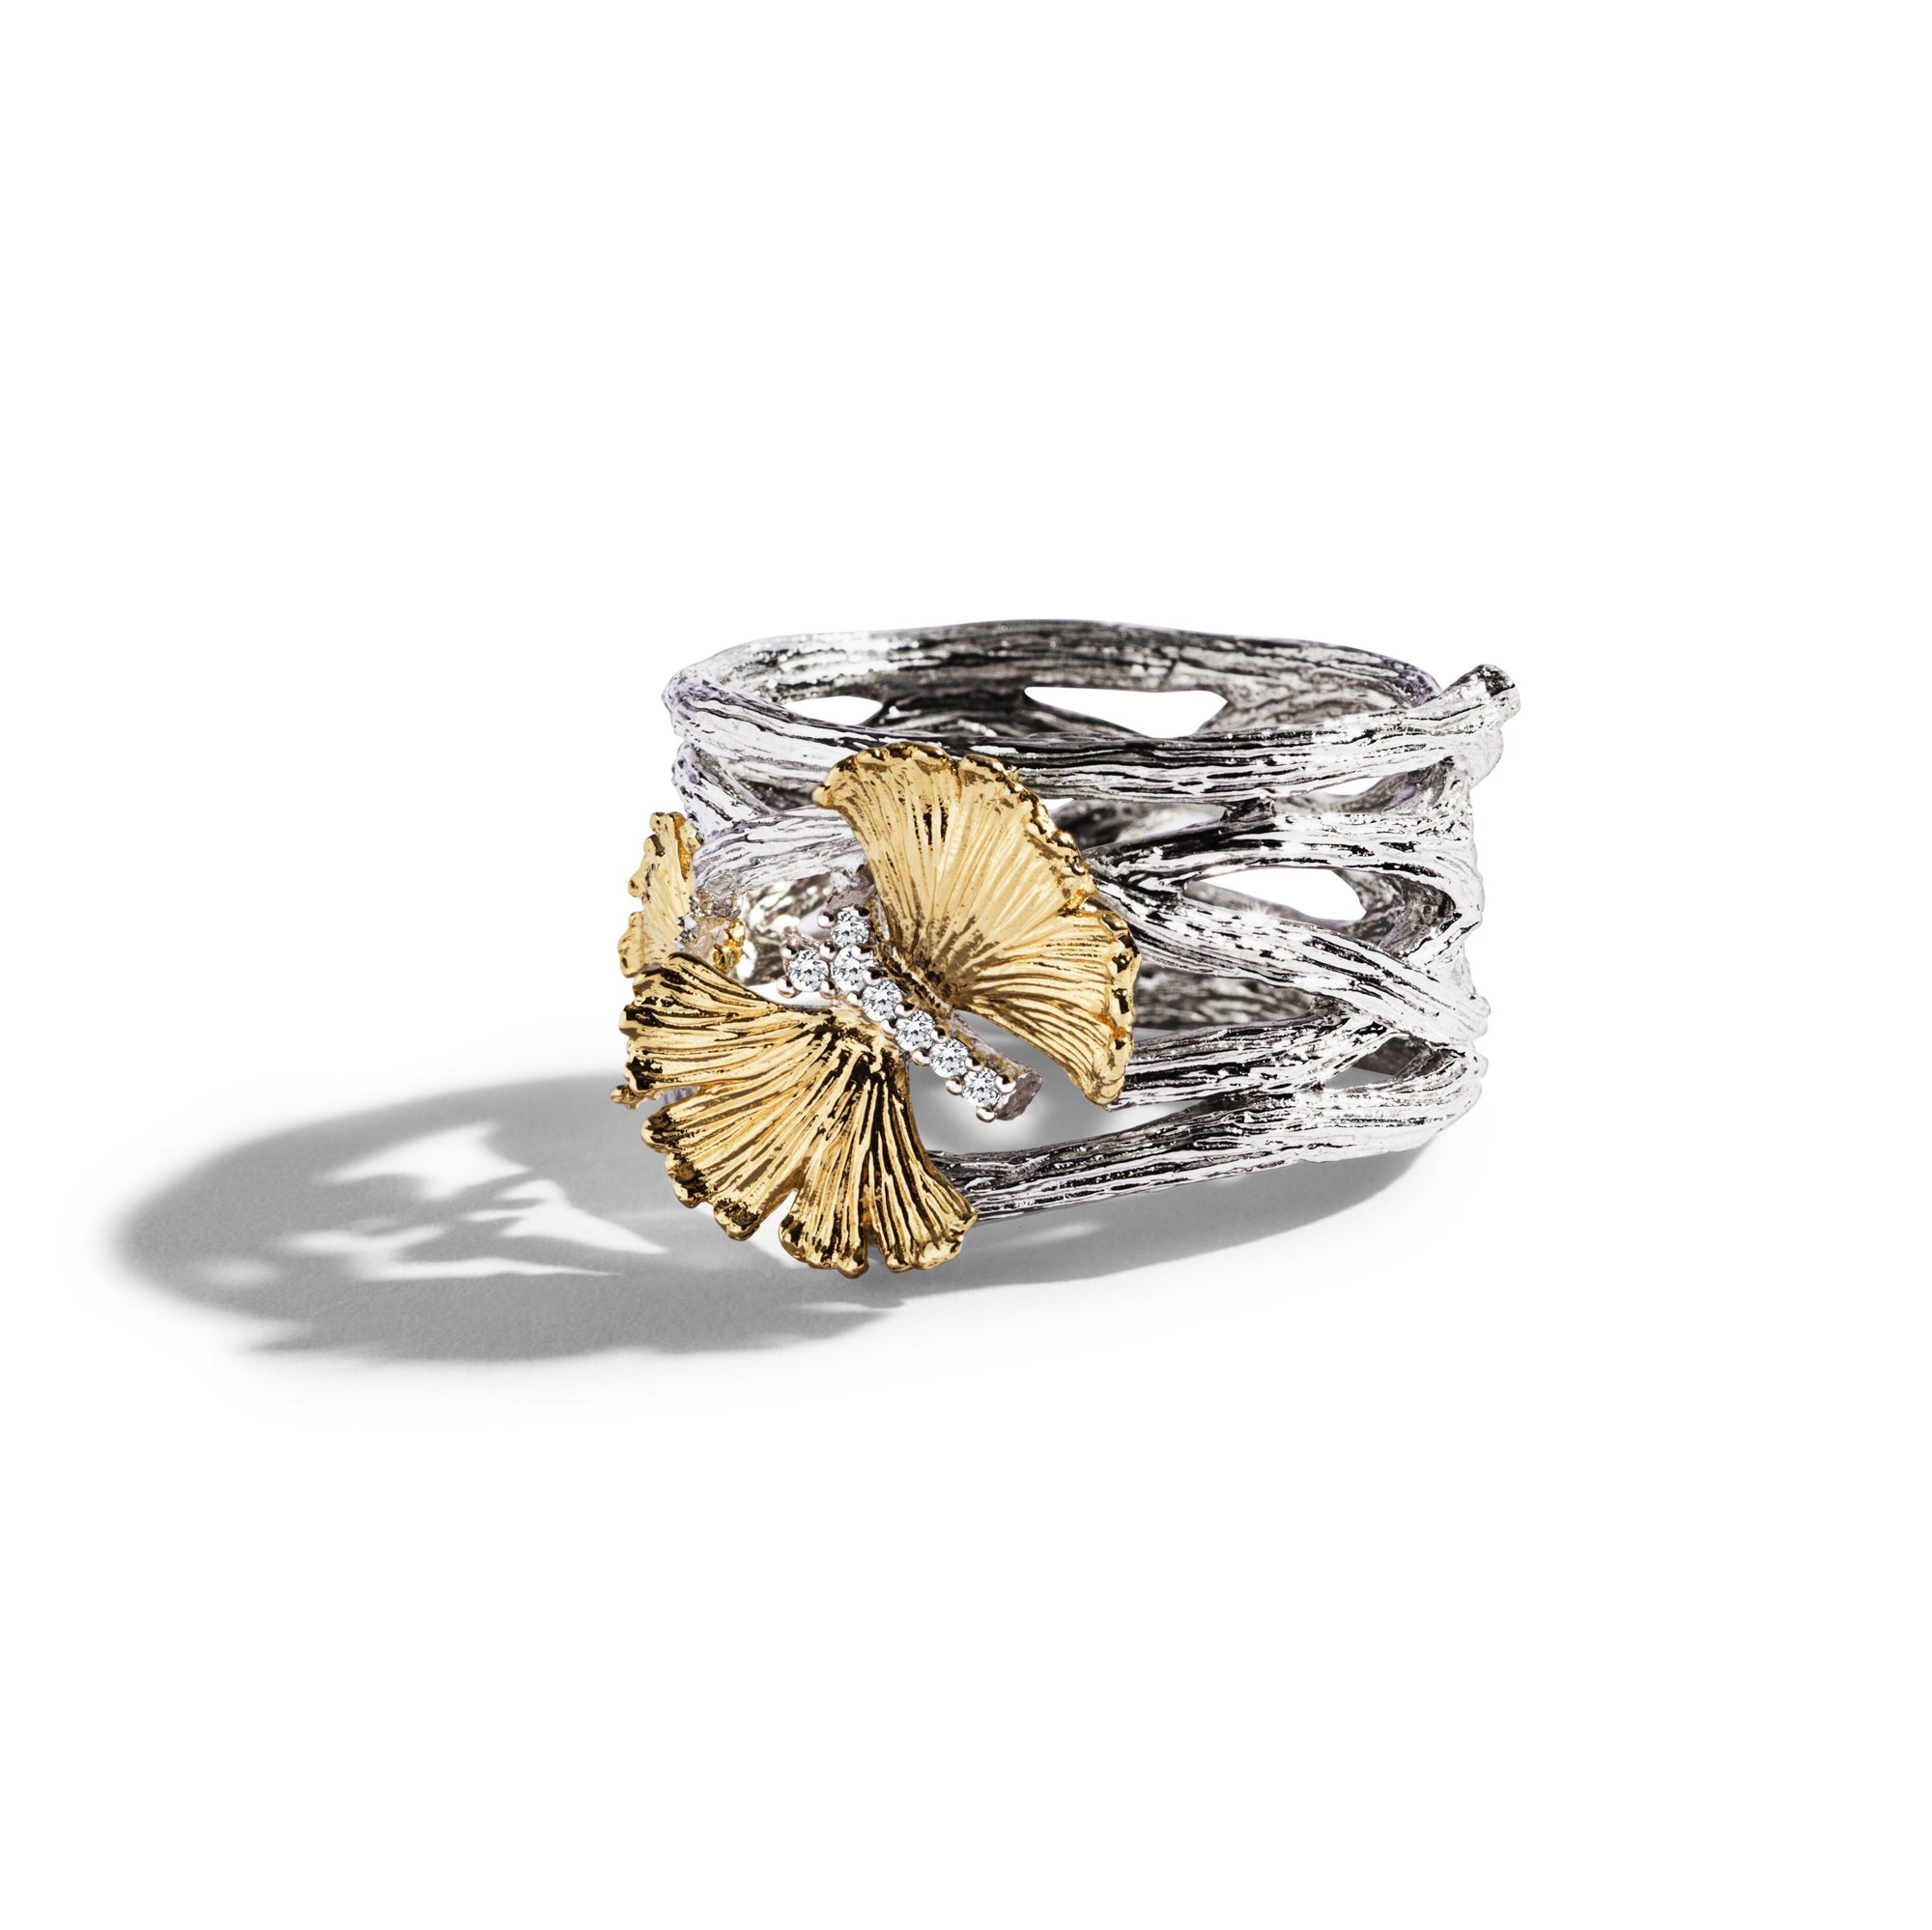 Michael Aram Butterfly Gingko Cuff Ring with Diamonds